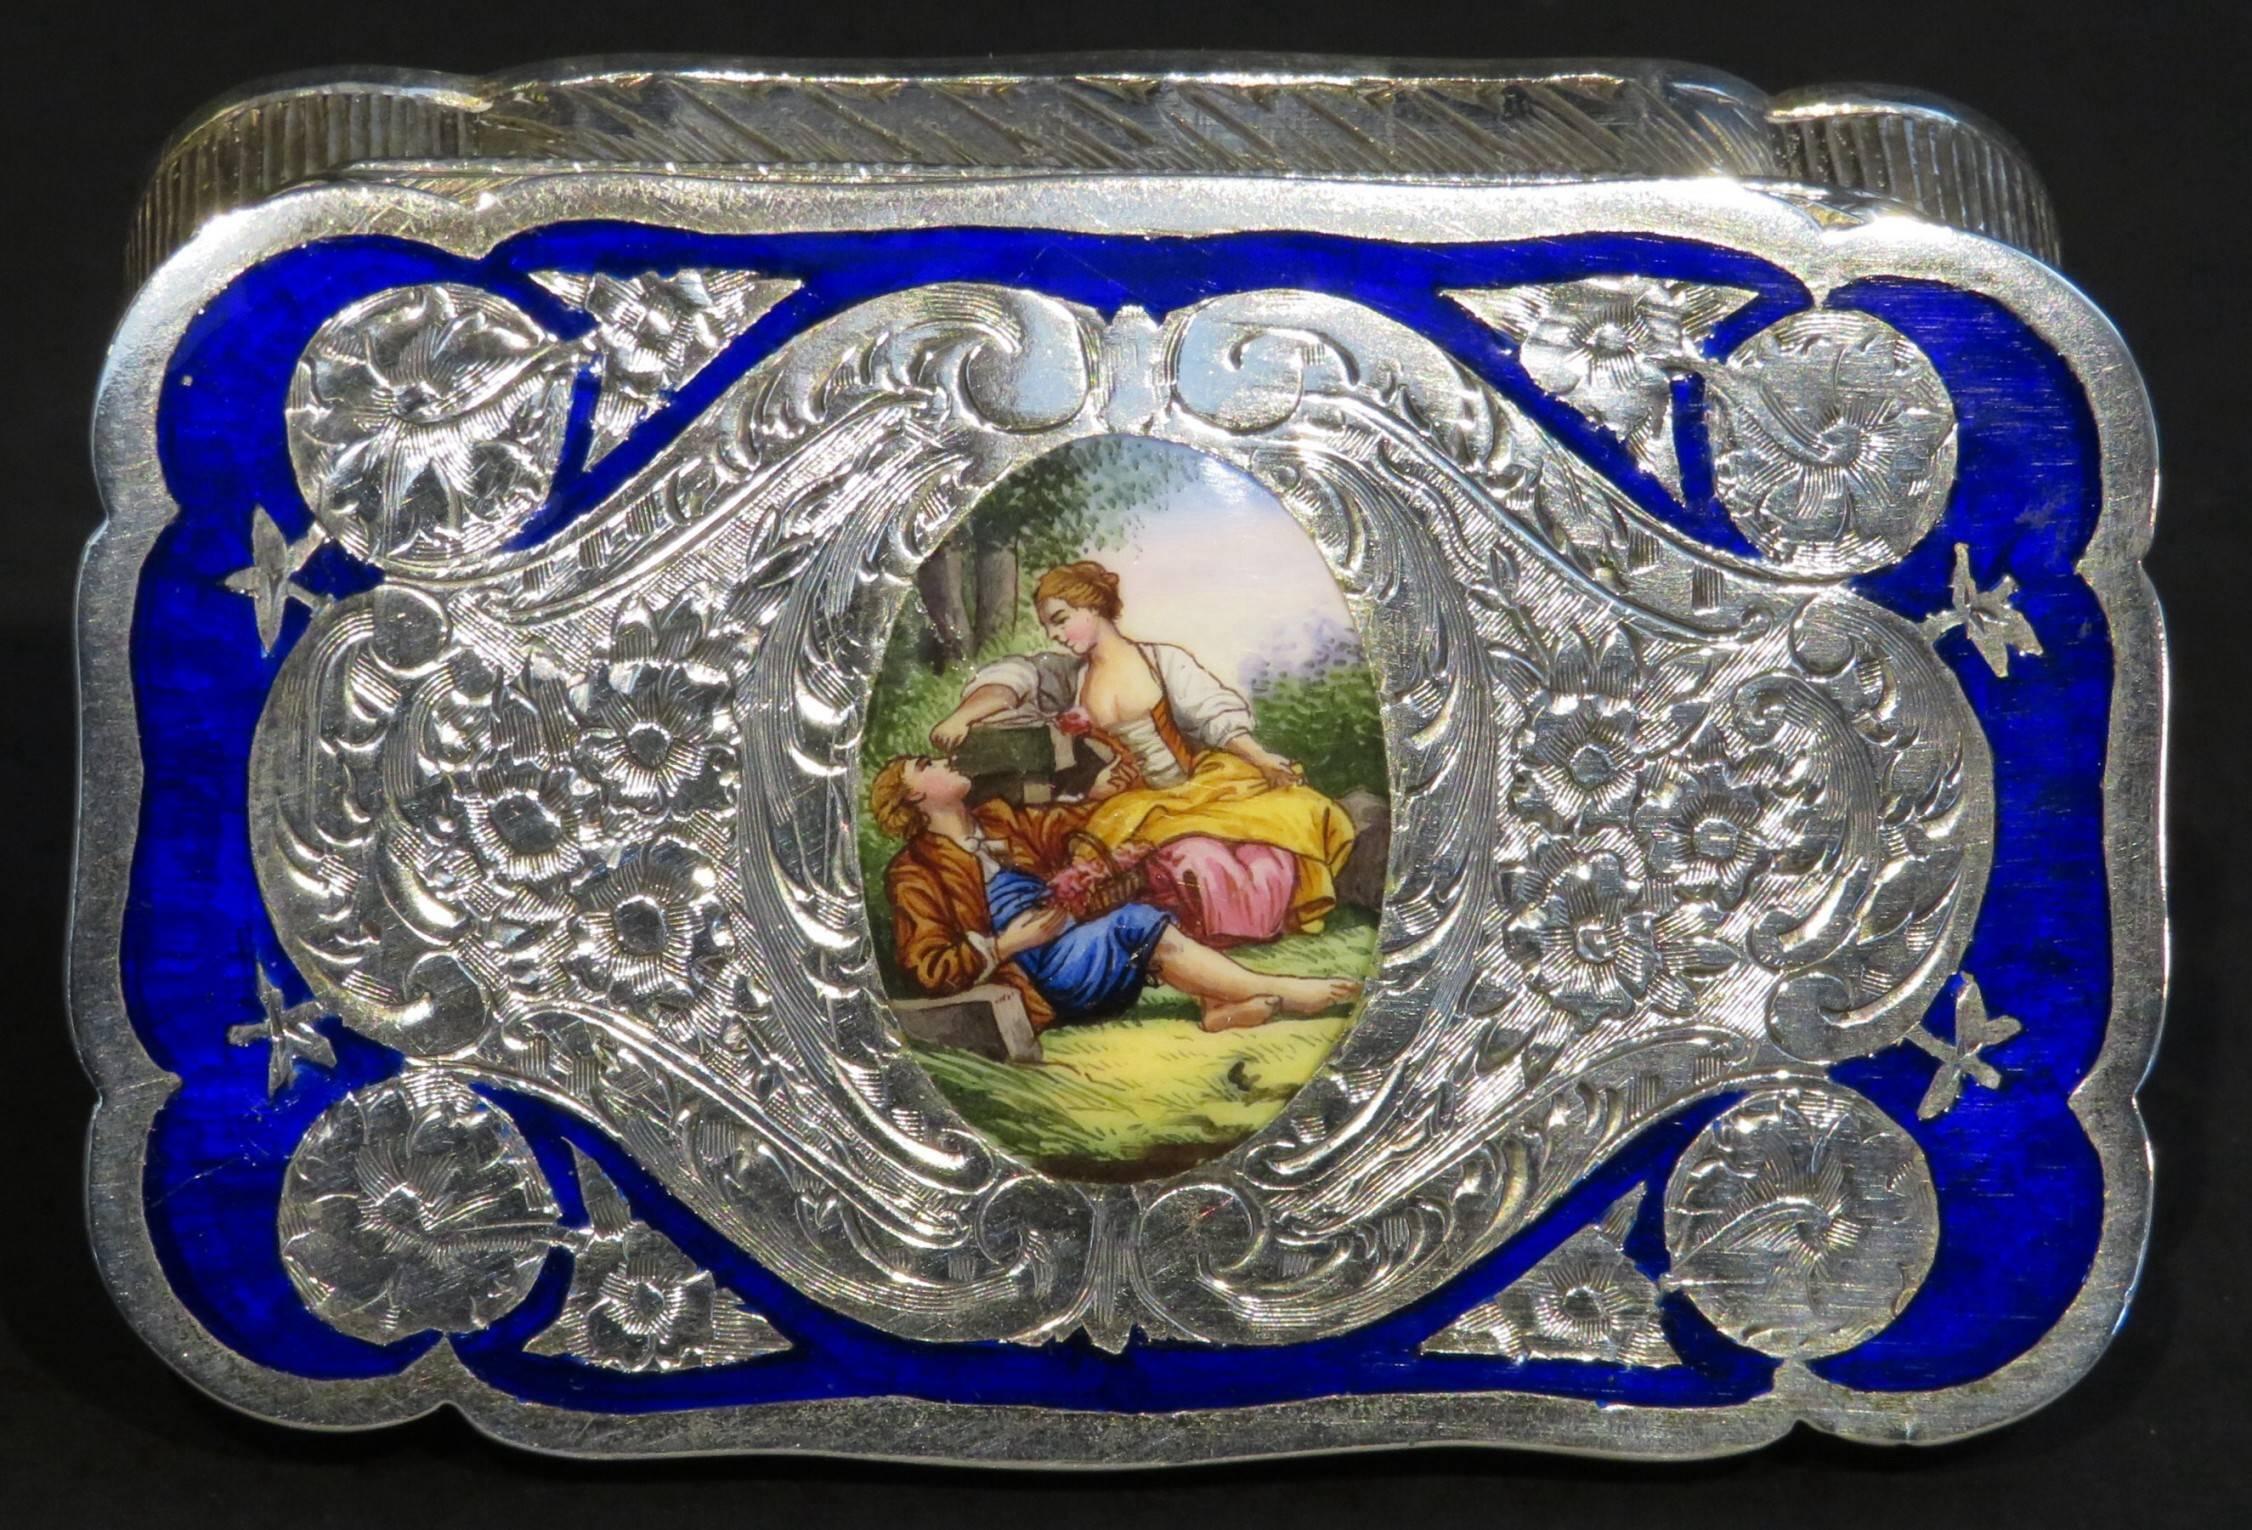 Baroque Revival Very Fine 19th Century Austro-Hungarian Silver and Enamel Snuff Box, Circa 1890